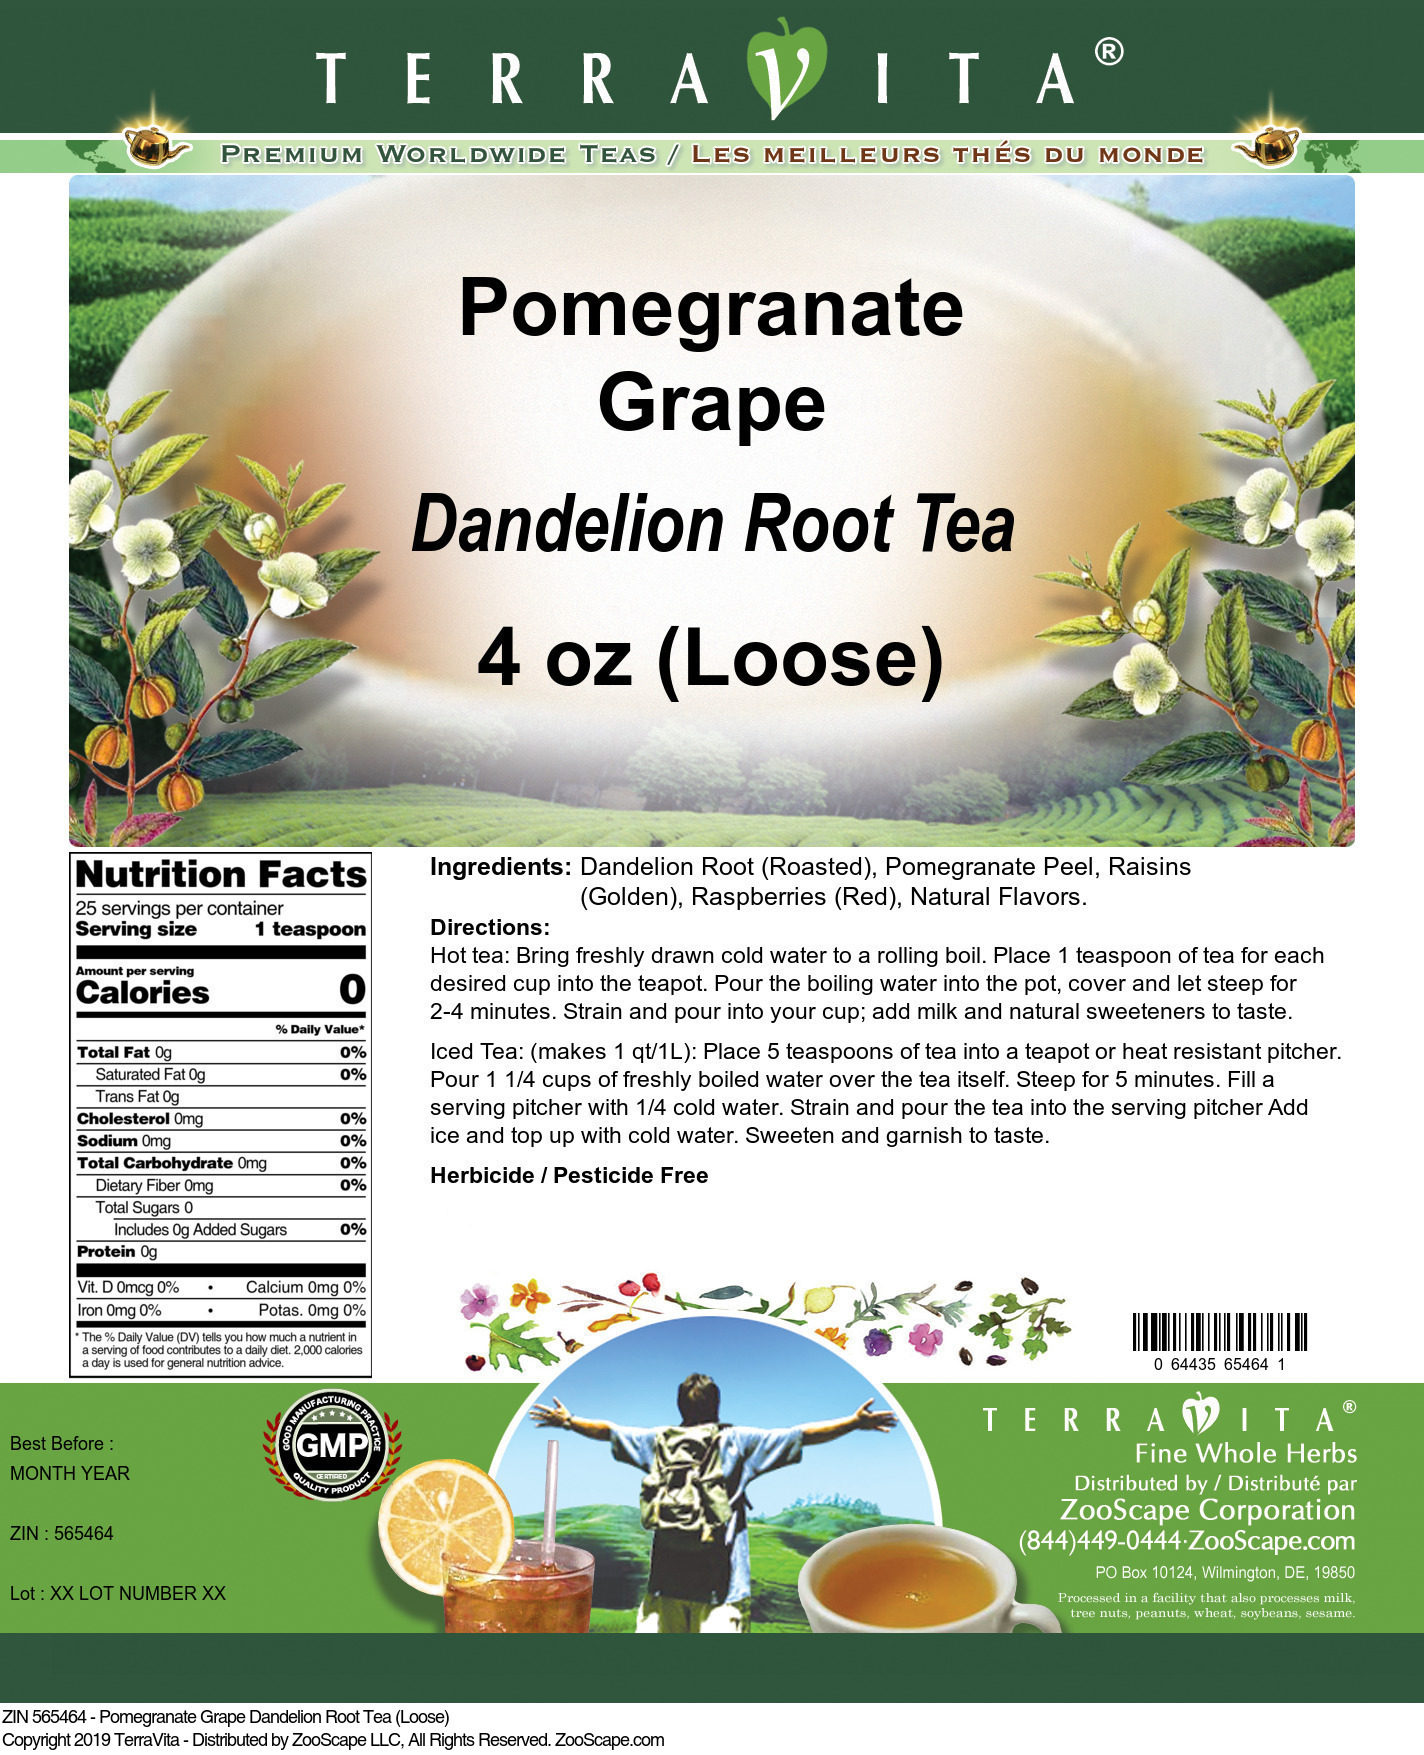 Pomegranate Grape Dandelion Root Tea (Loose) - Label